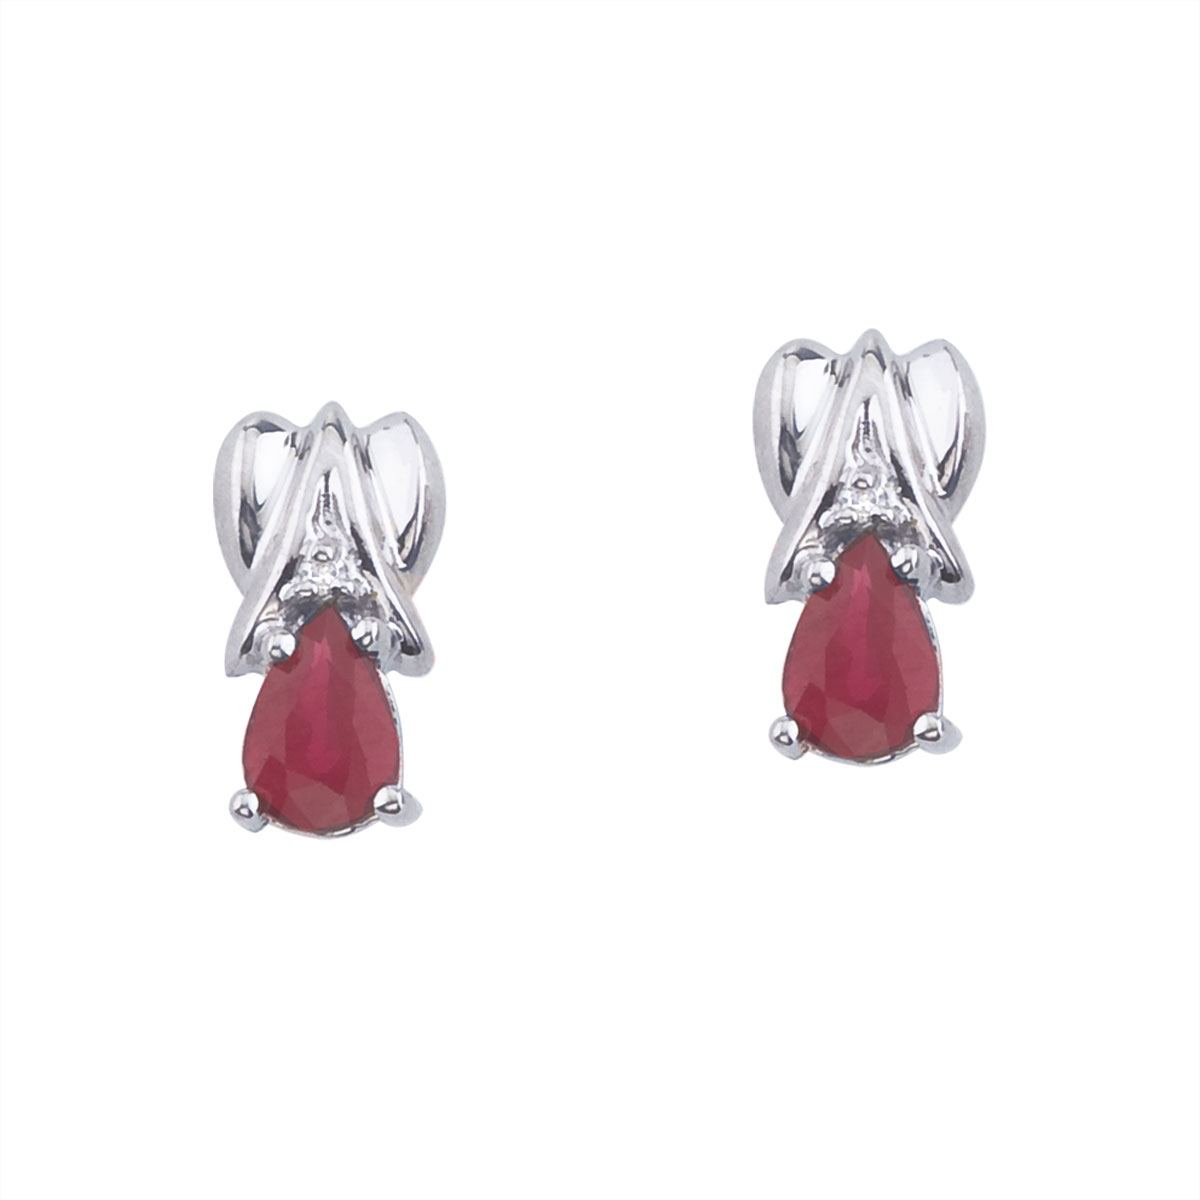 JCX2294: 14k White Gold Pear-Shaped Ruby and Diamond Stud Earrings